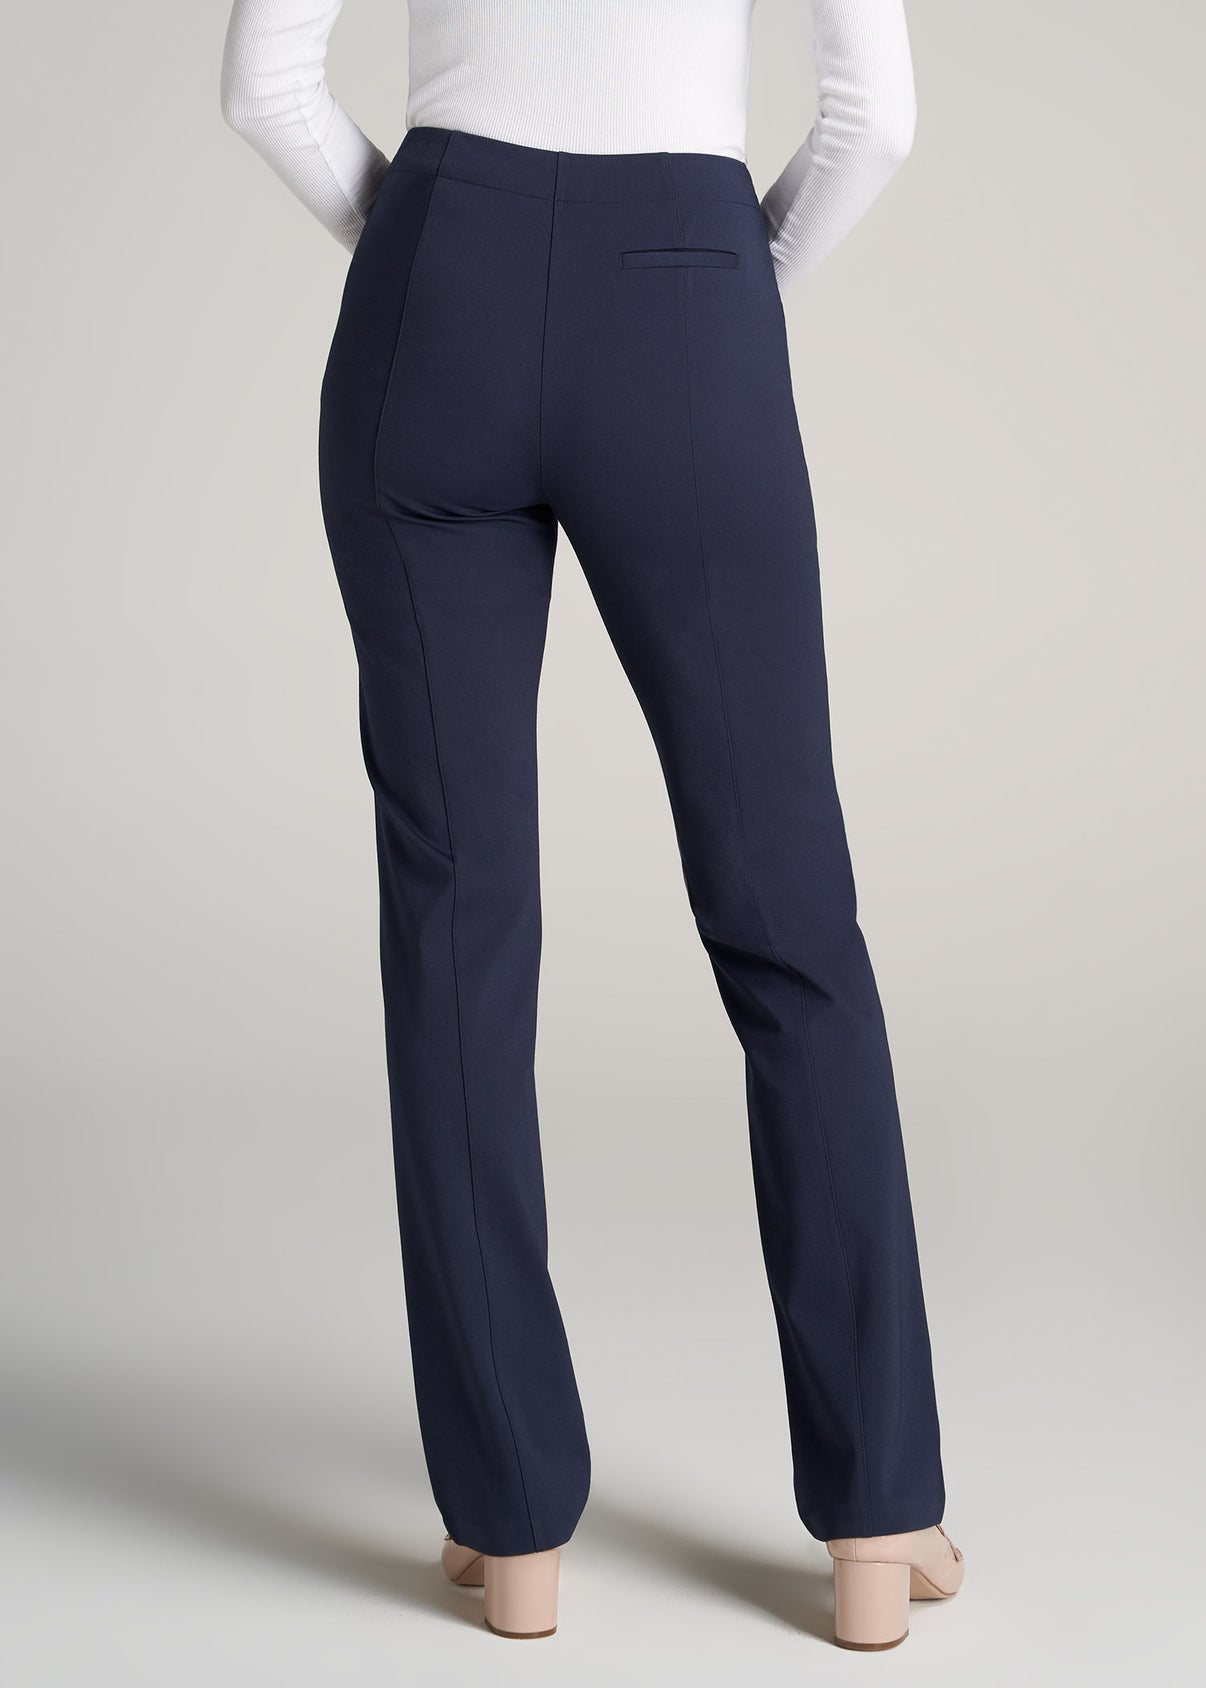 Slacks for Women: Tall lady Straight Leg Navy Pants | American Tall